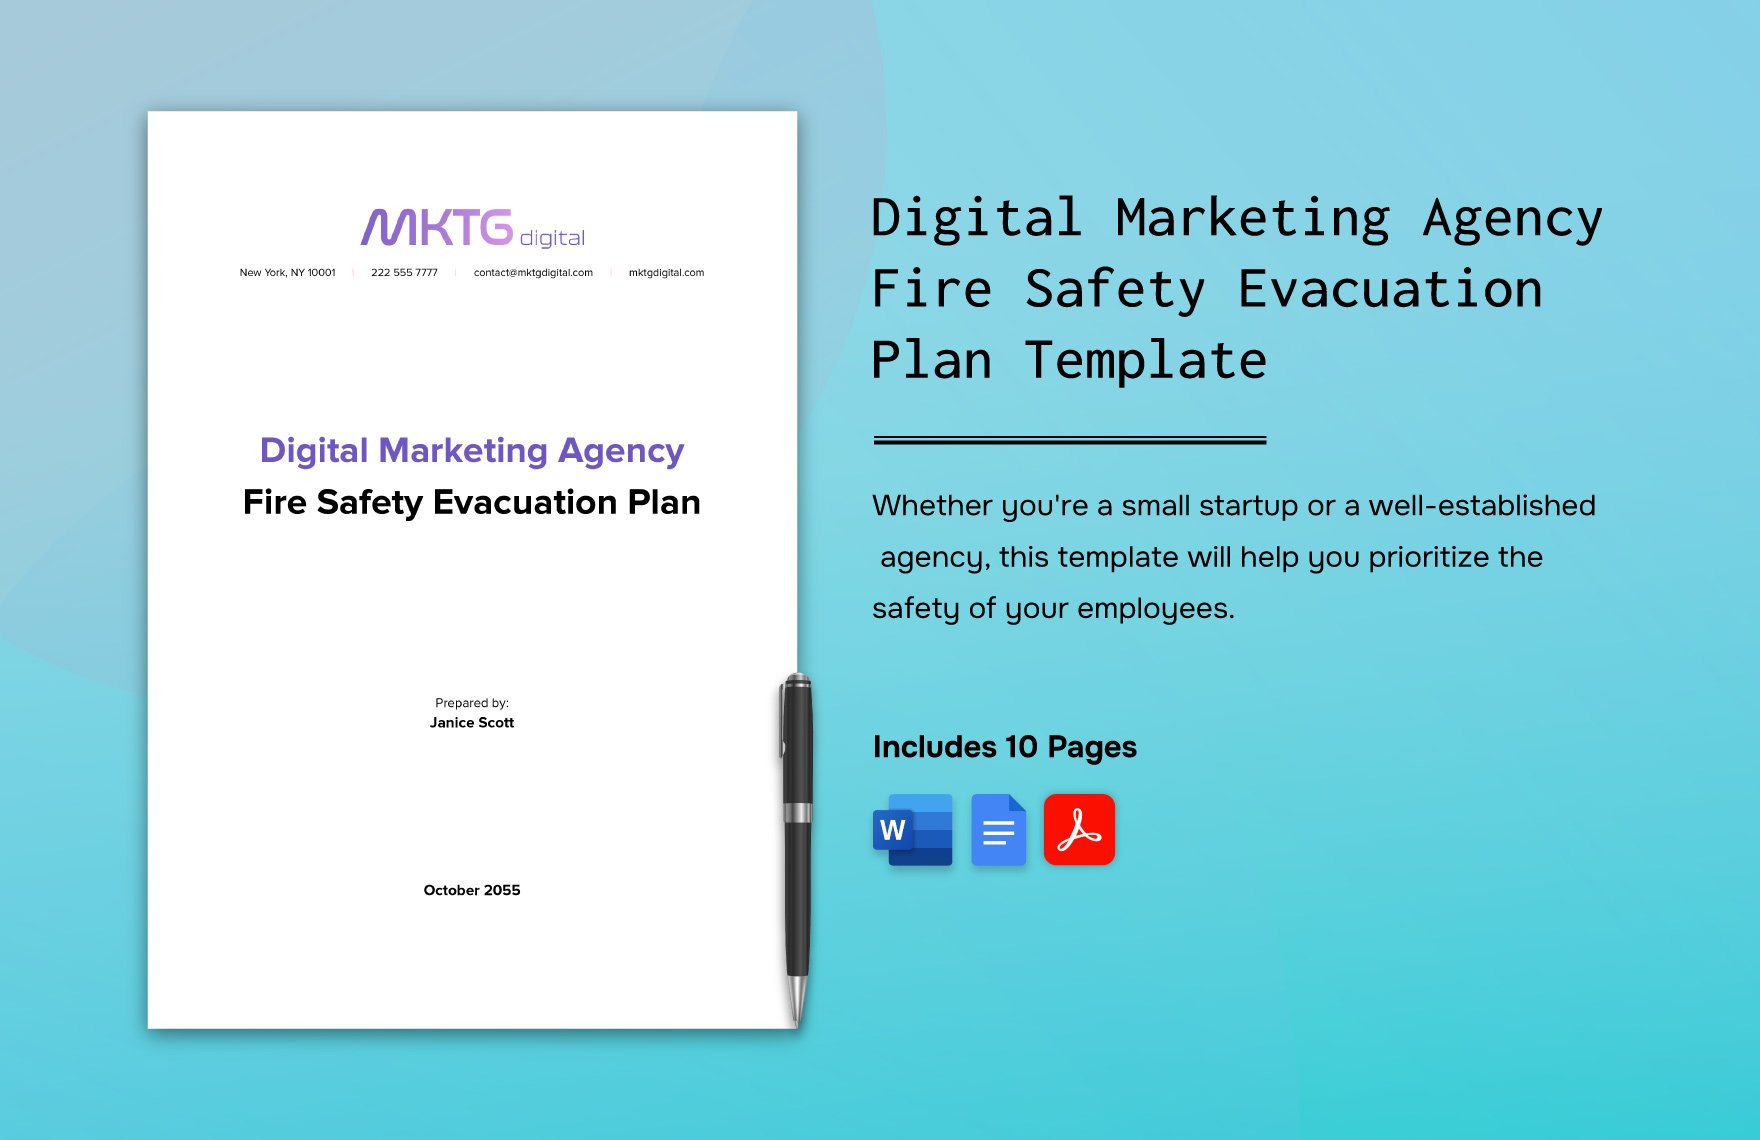 Digital Marketing Agency Fire Safety Evacuation Plan Template